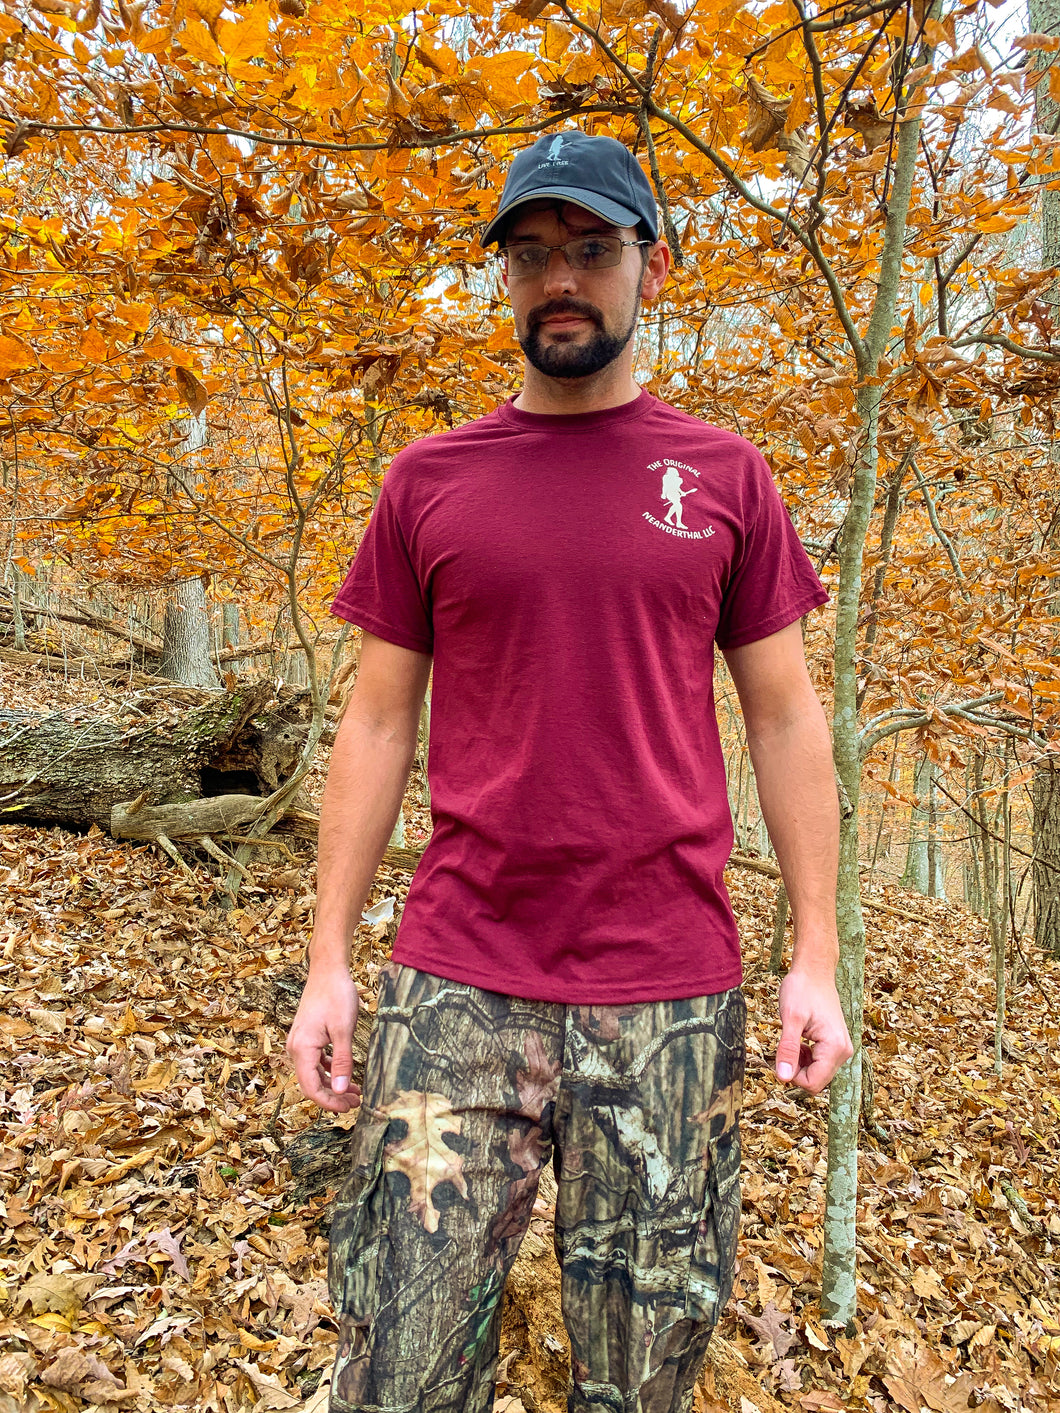 Hunter Not Hunted T-Shirt